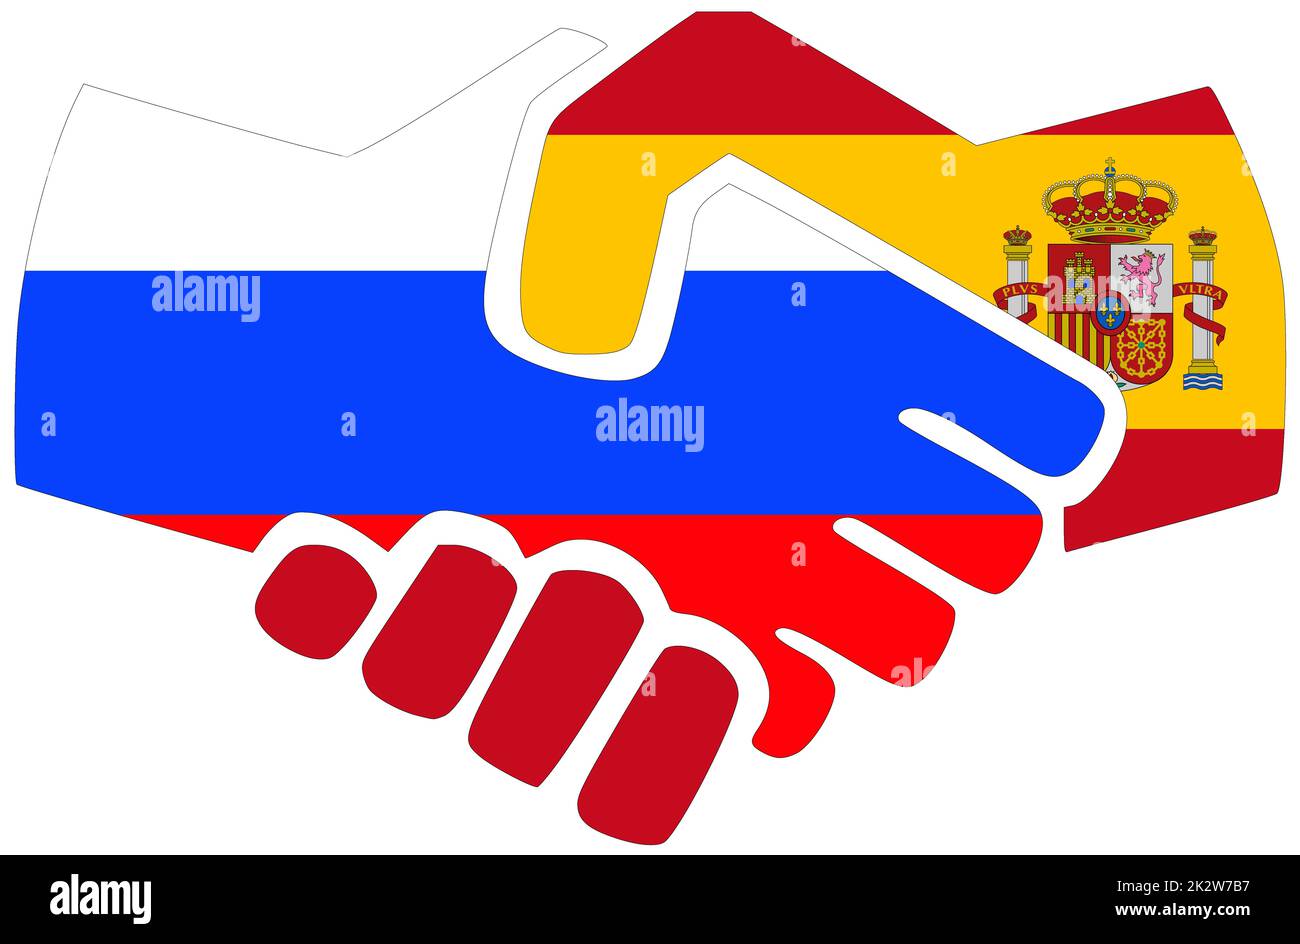 Russia - Spain : Handshake, symbol of agreement or friendship Stock Photo